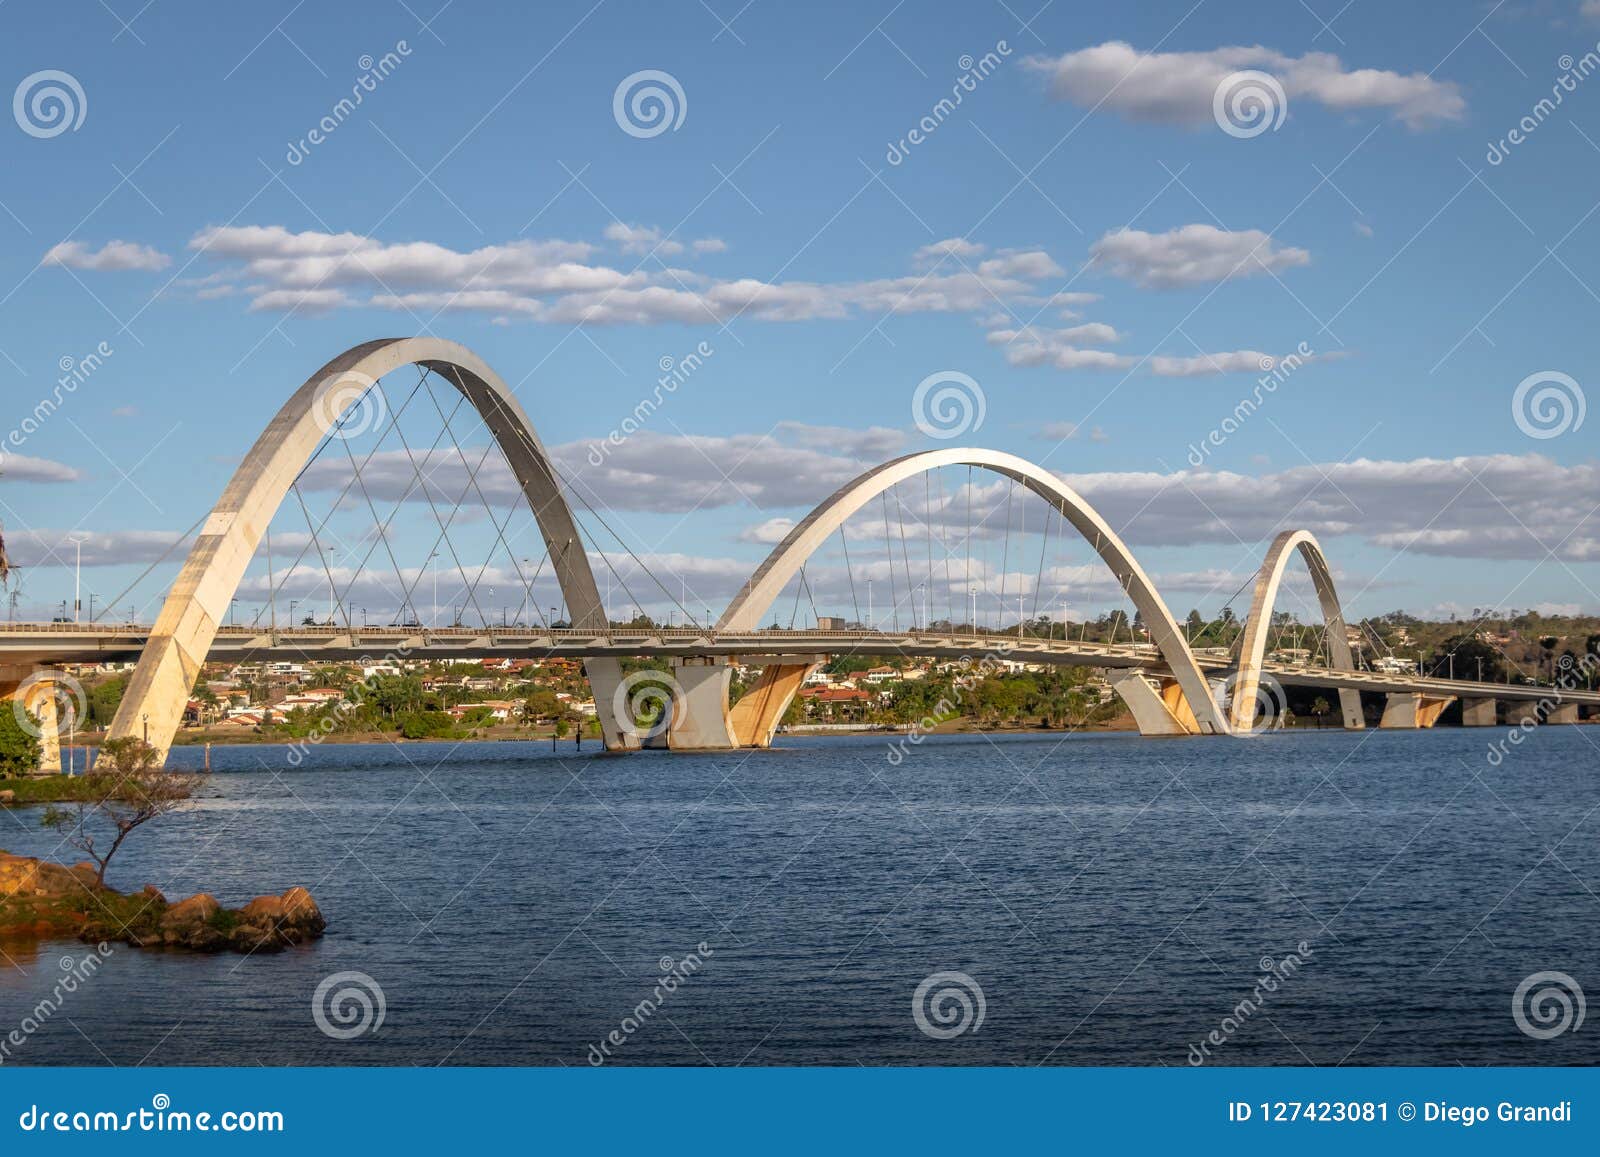 jk bridge and paranoa lake - brasilia, distrito federal, brazil